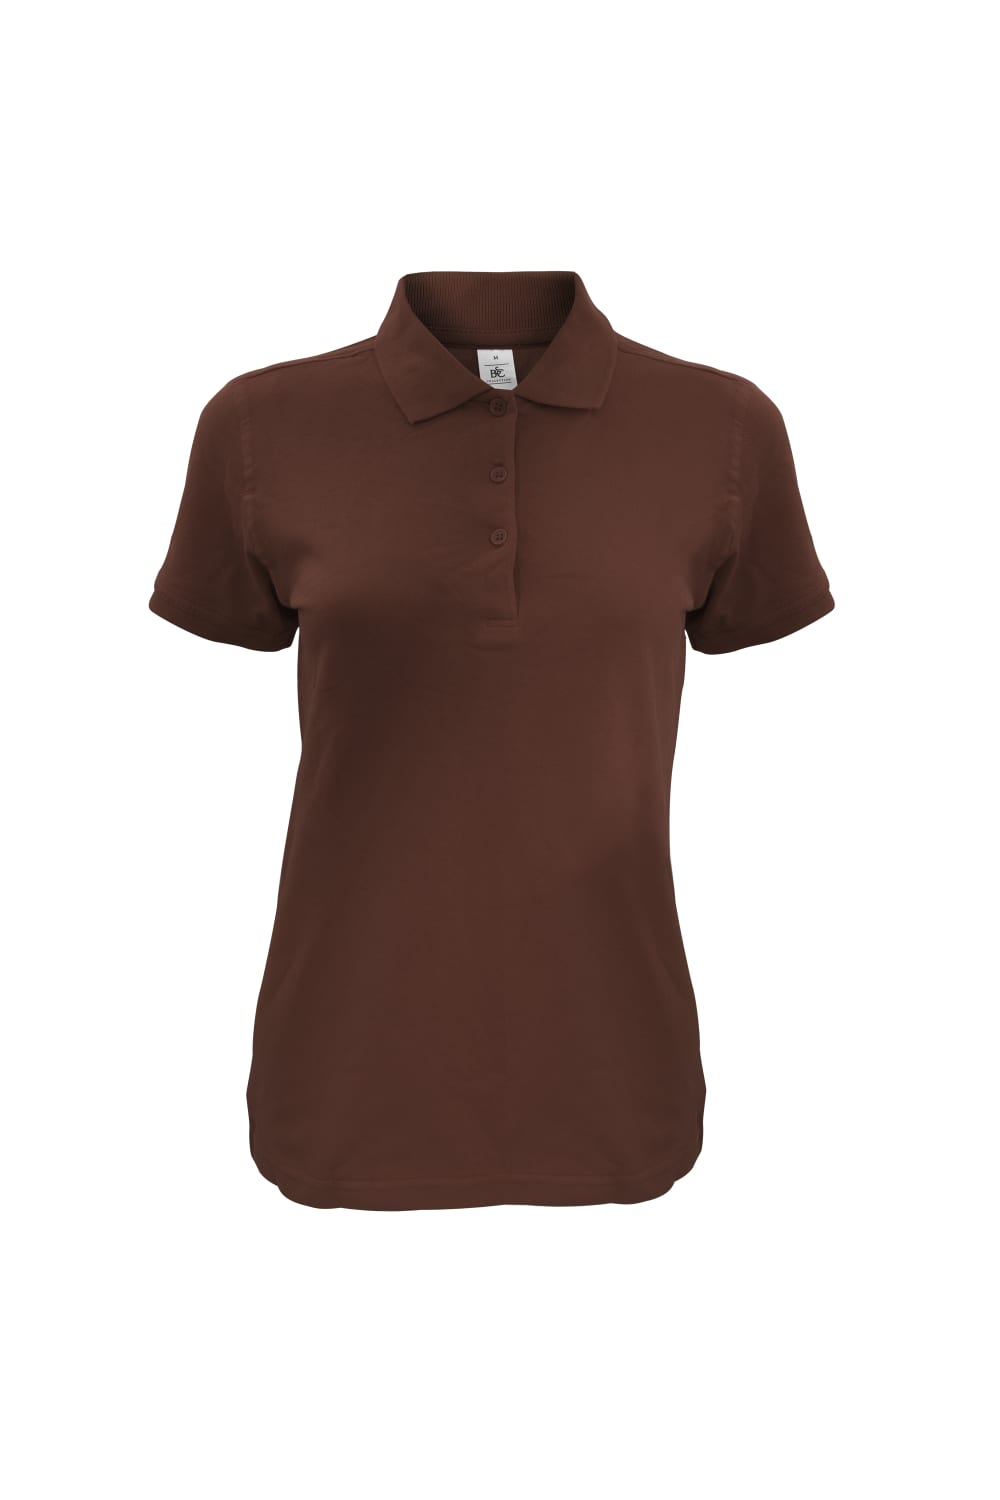 B&C Womens/Ladies Safran Timeless Polo Shirt (Brown)